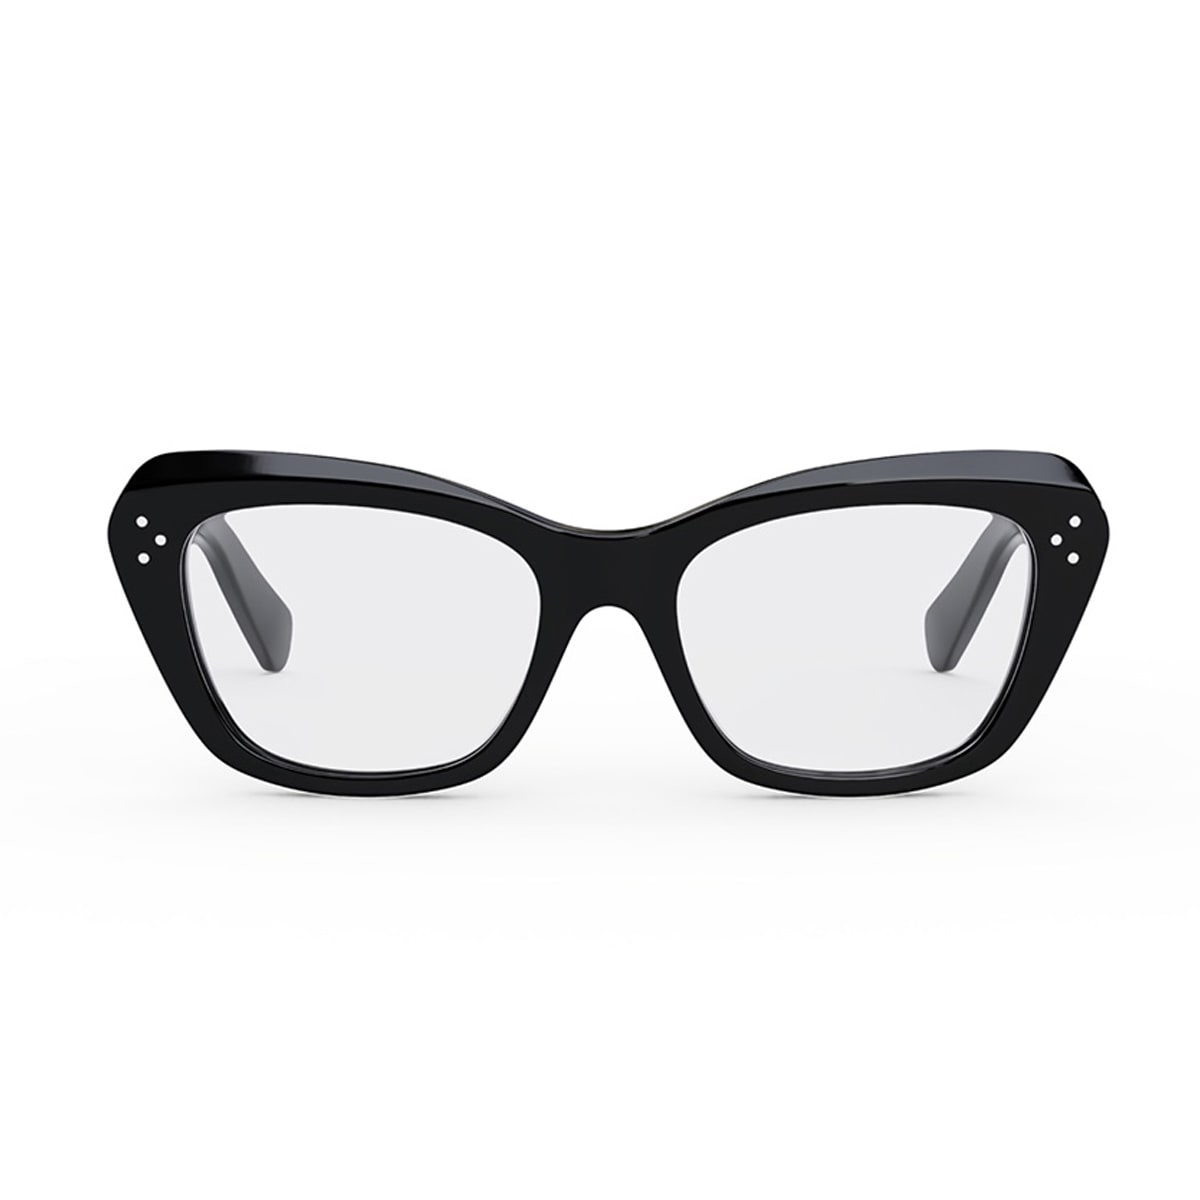 Cl50112i 001 Glasses